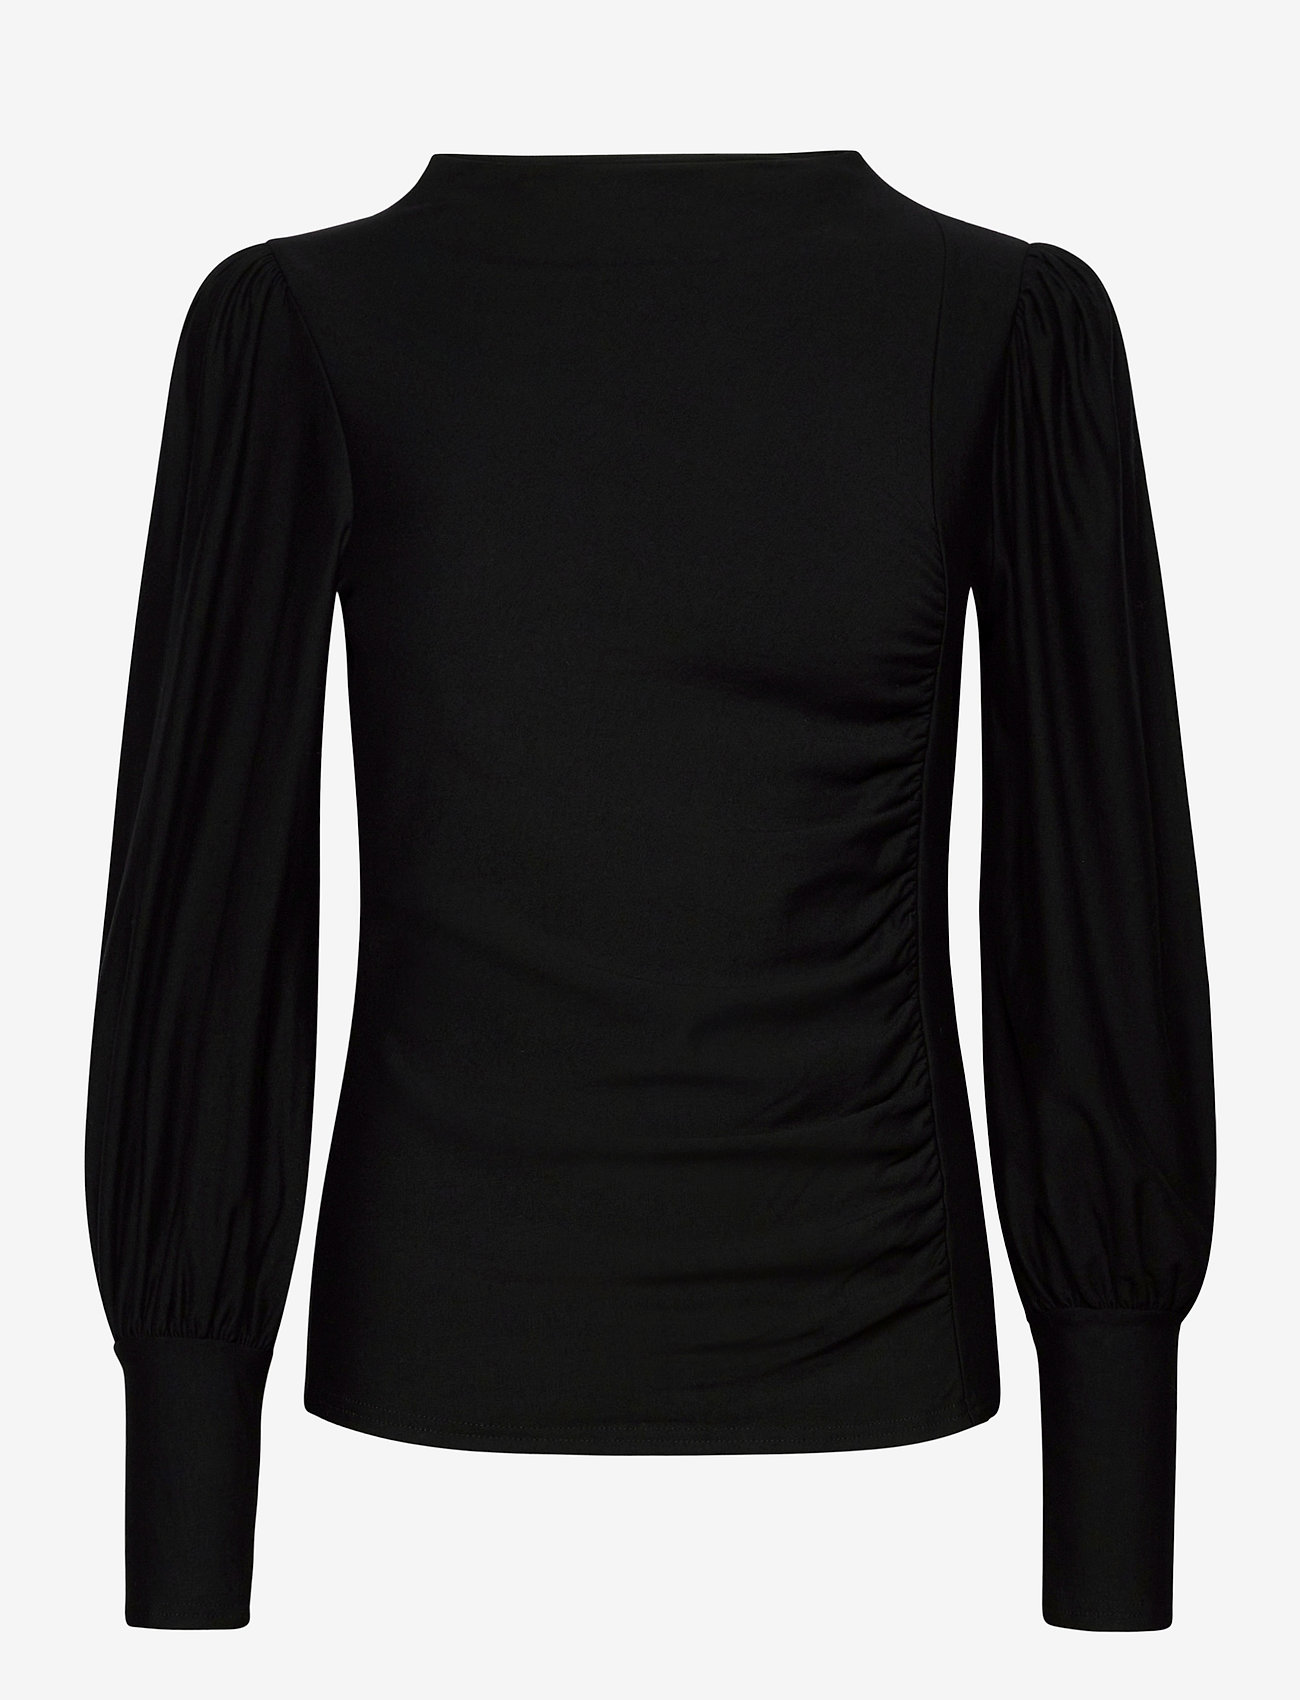 Gestuz - RifaGZ puff blouse NOOS - long-sleeved blouses - black - 0